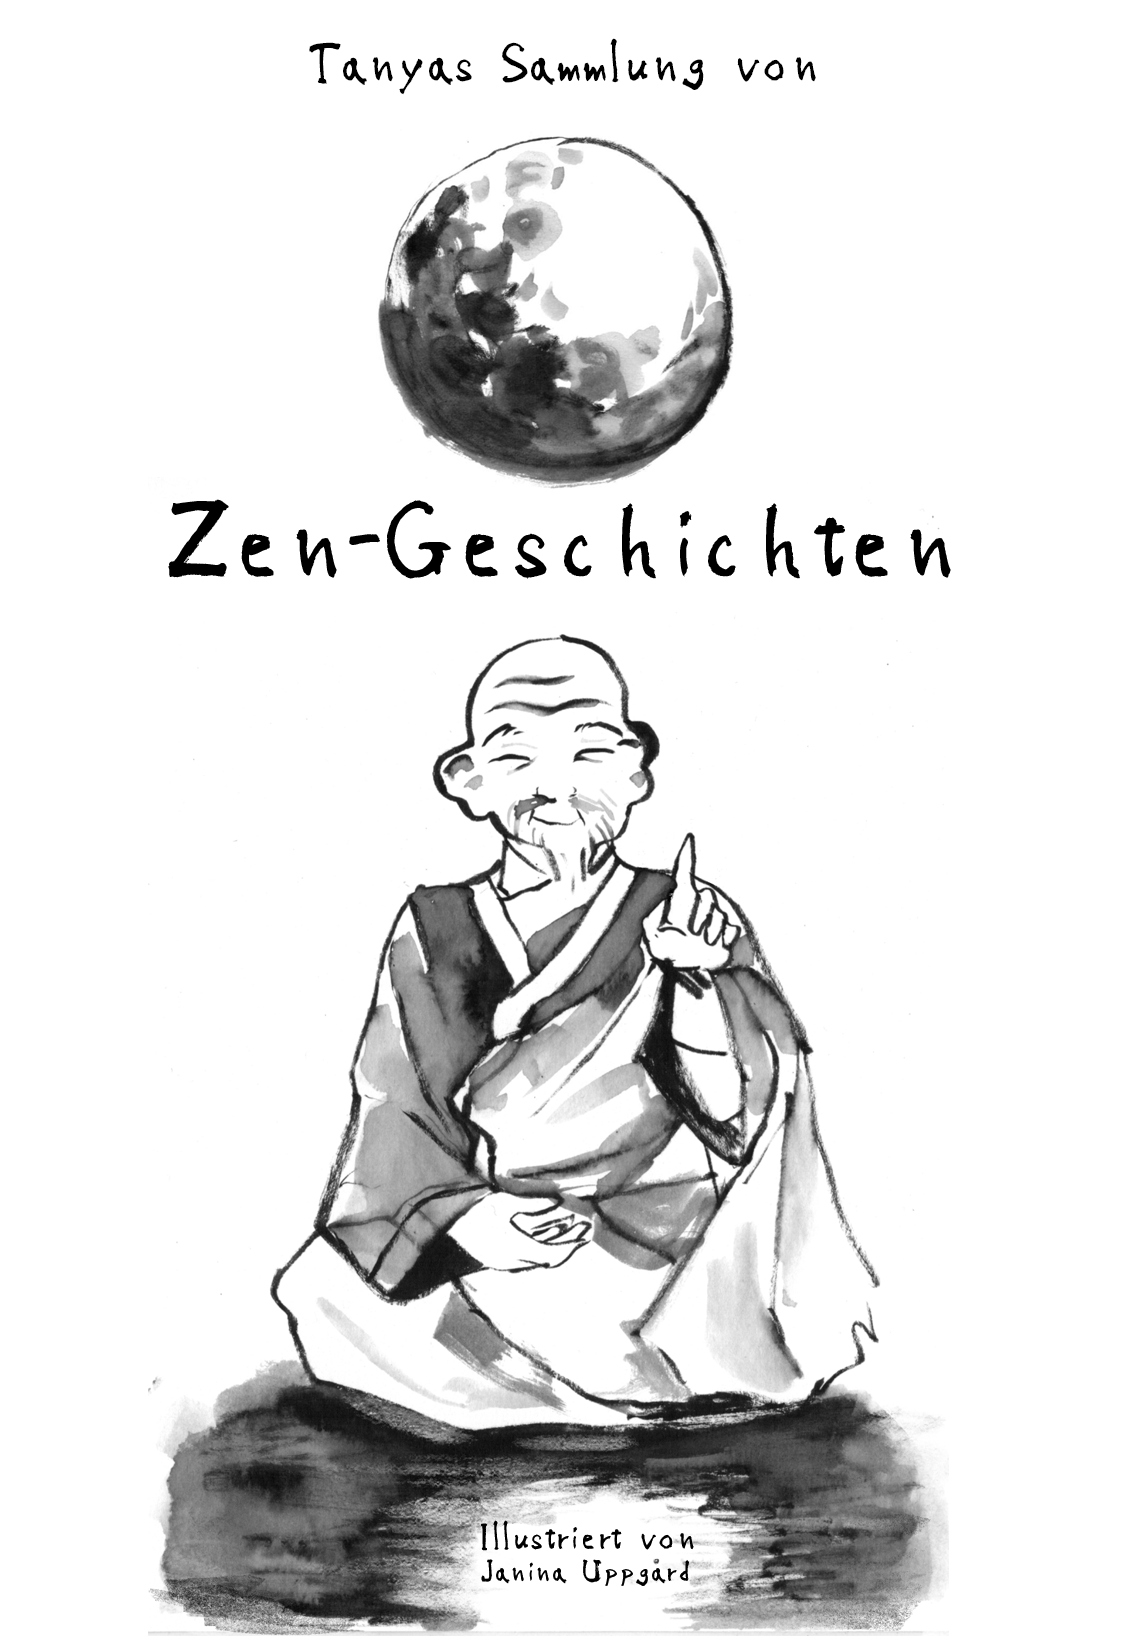 Случайная рассказ дзен. Легкое чтение дзен. Luna s Comics дзен. The story of Zen'in toit.